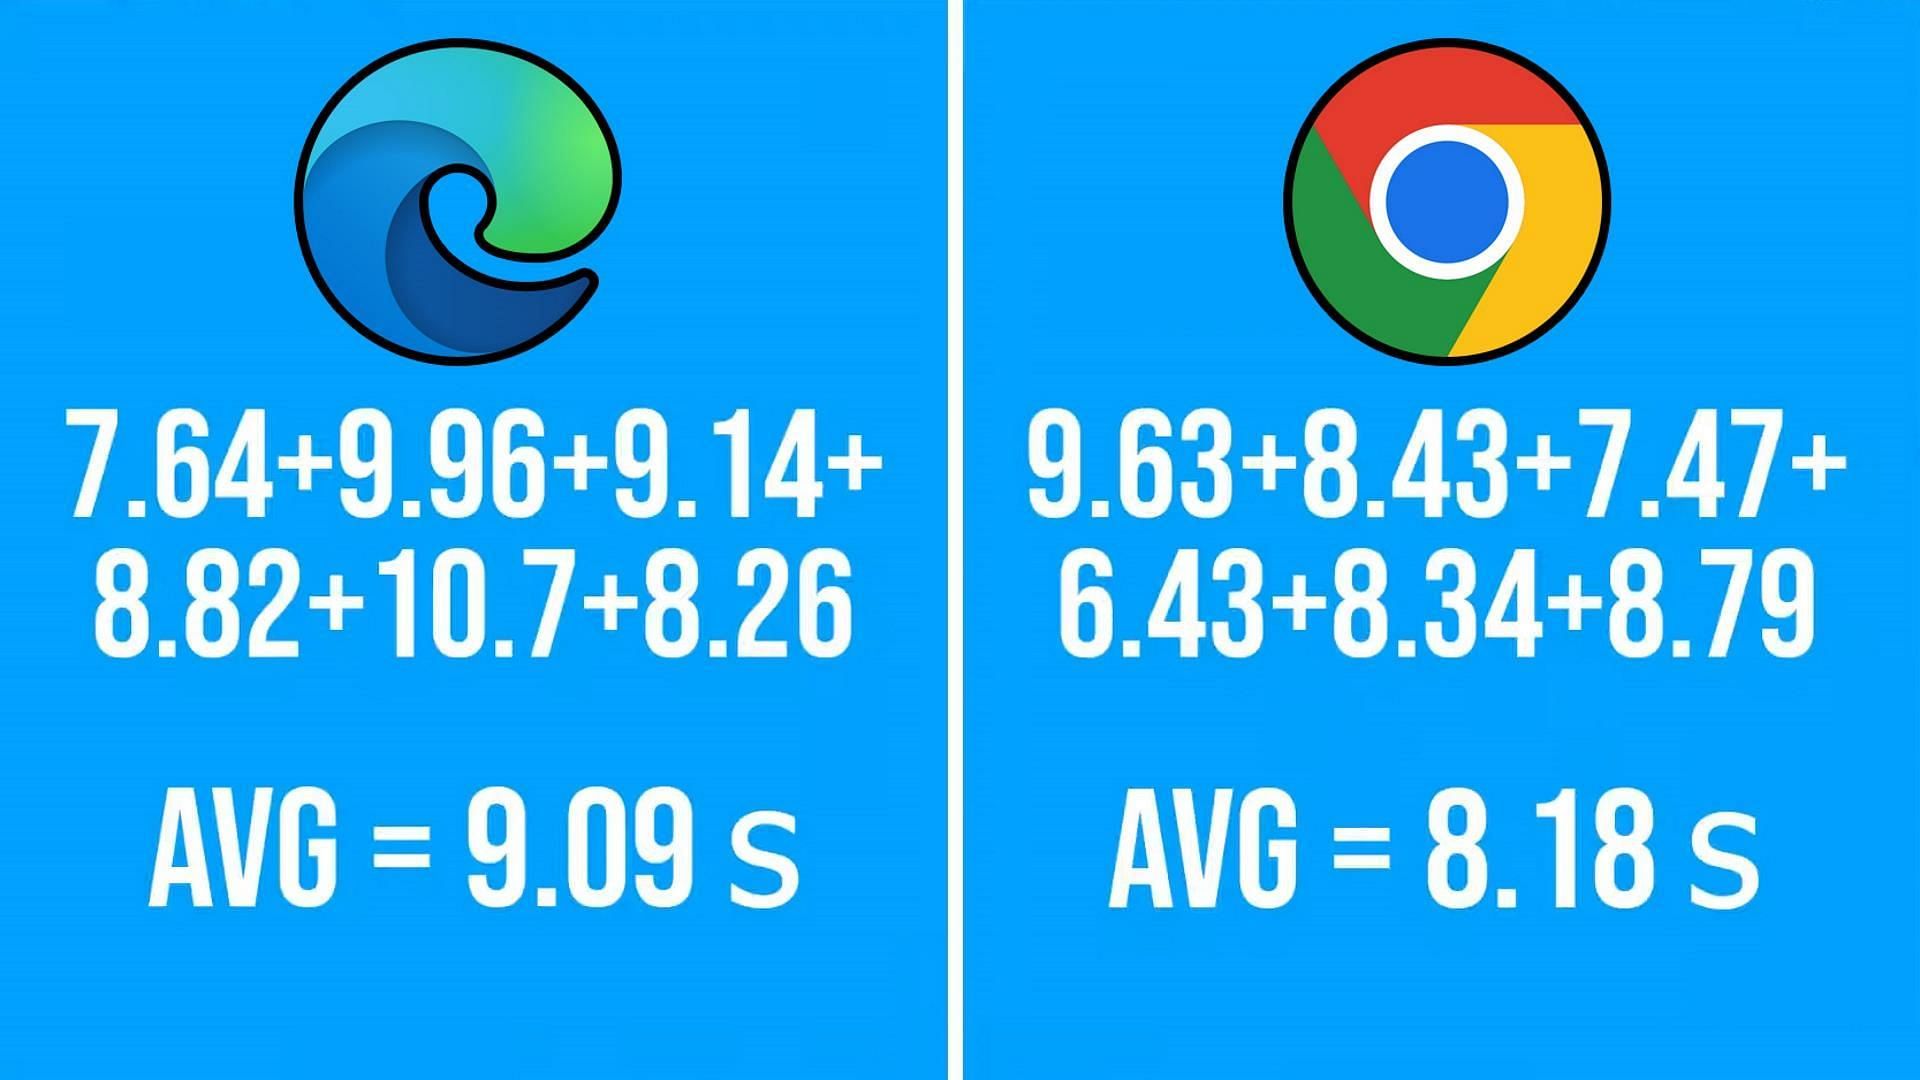 Speed test between Edge and Chrome (Image via Sportskeeda)